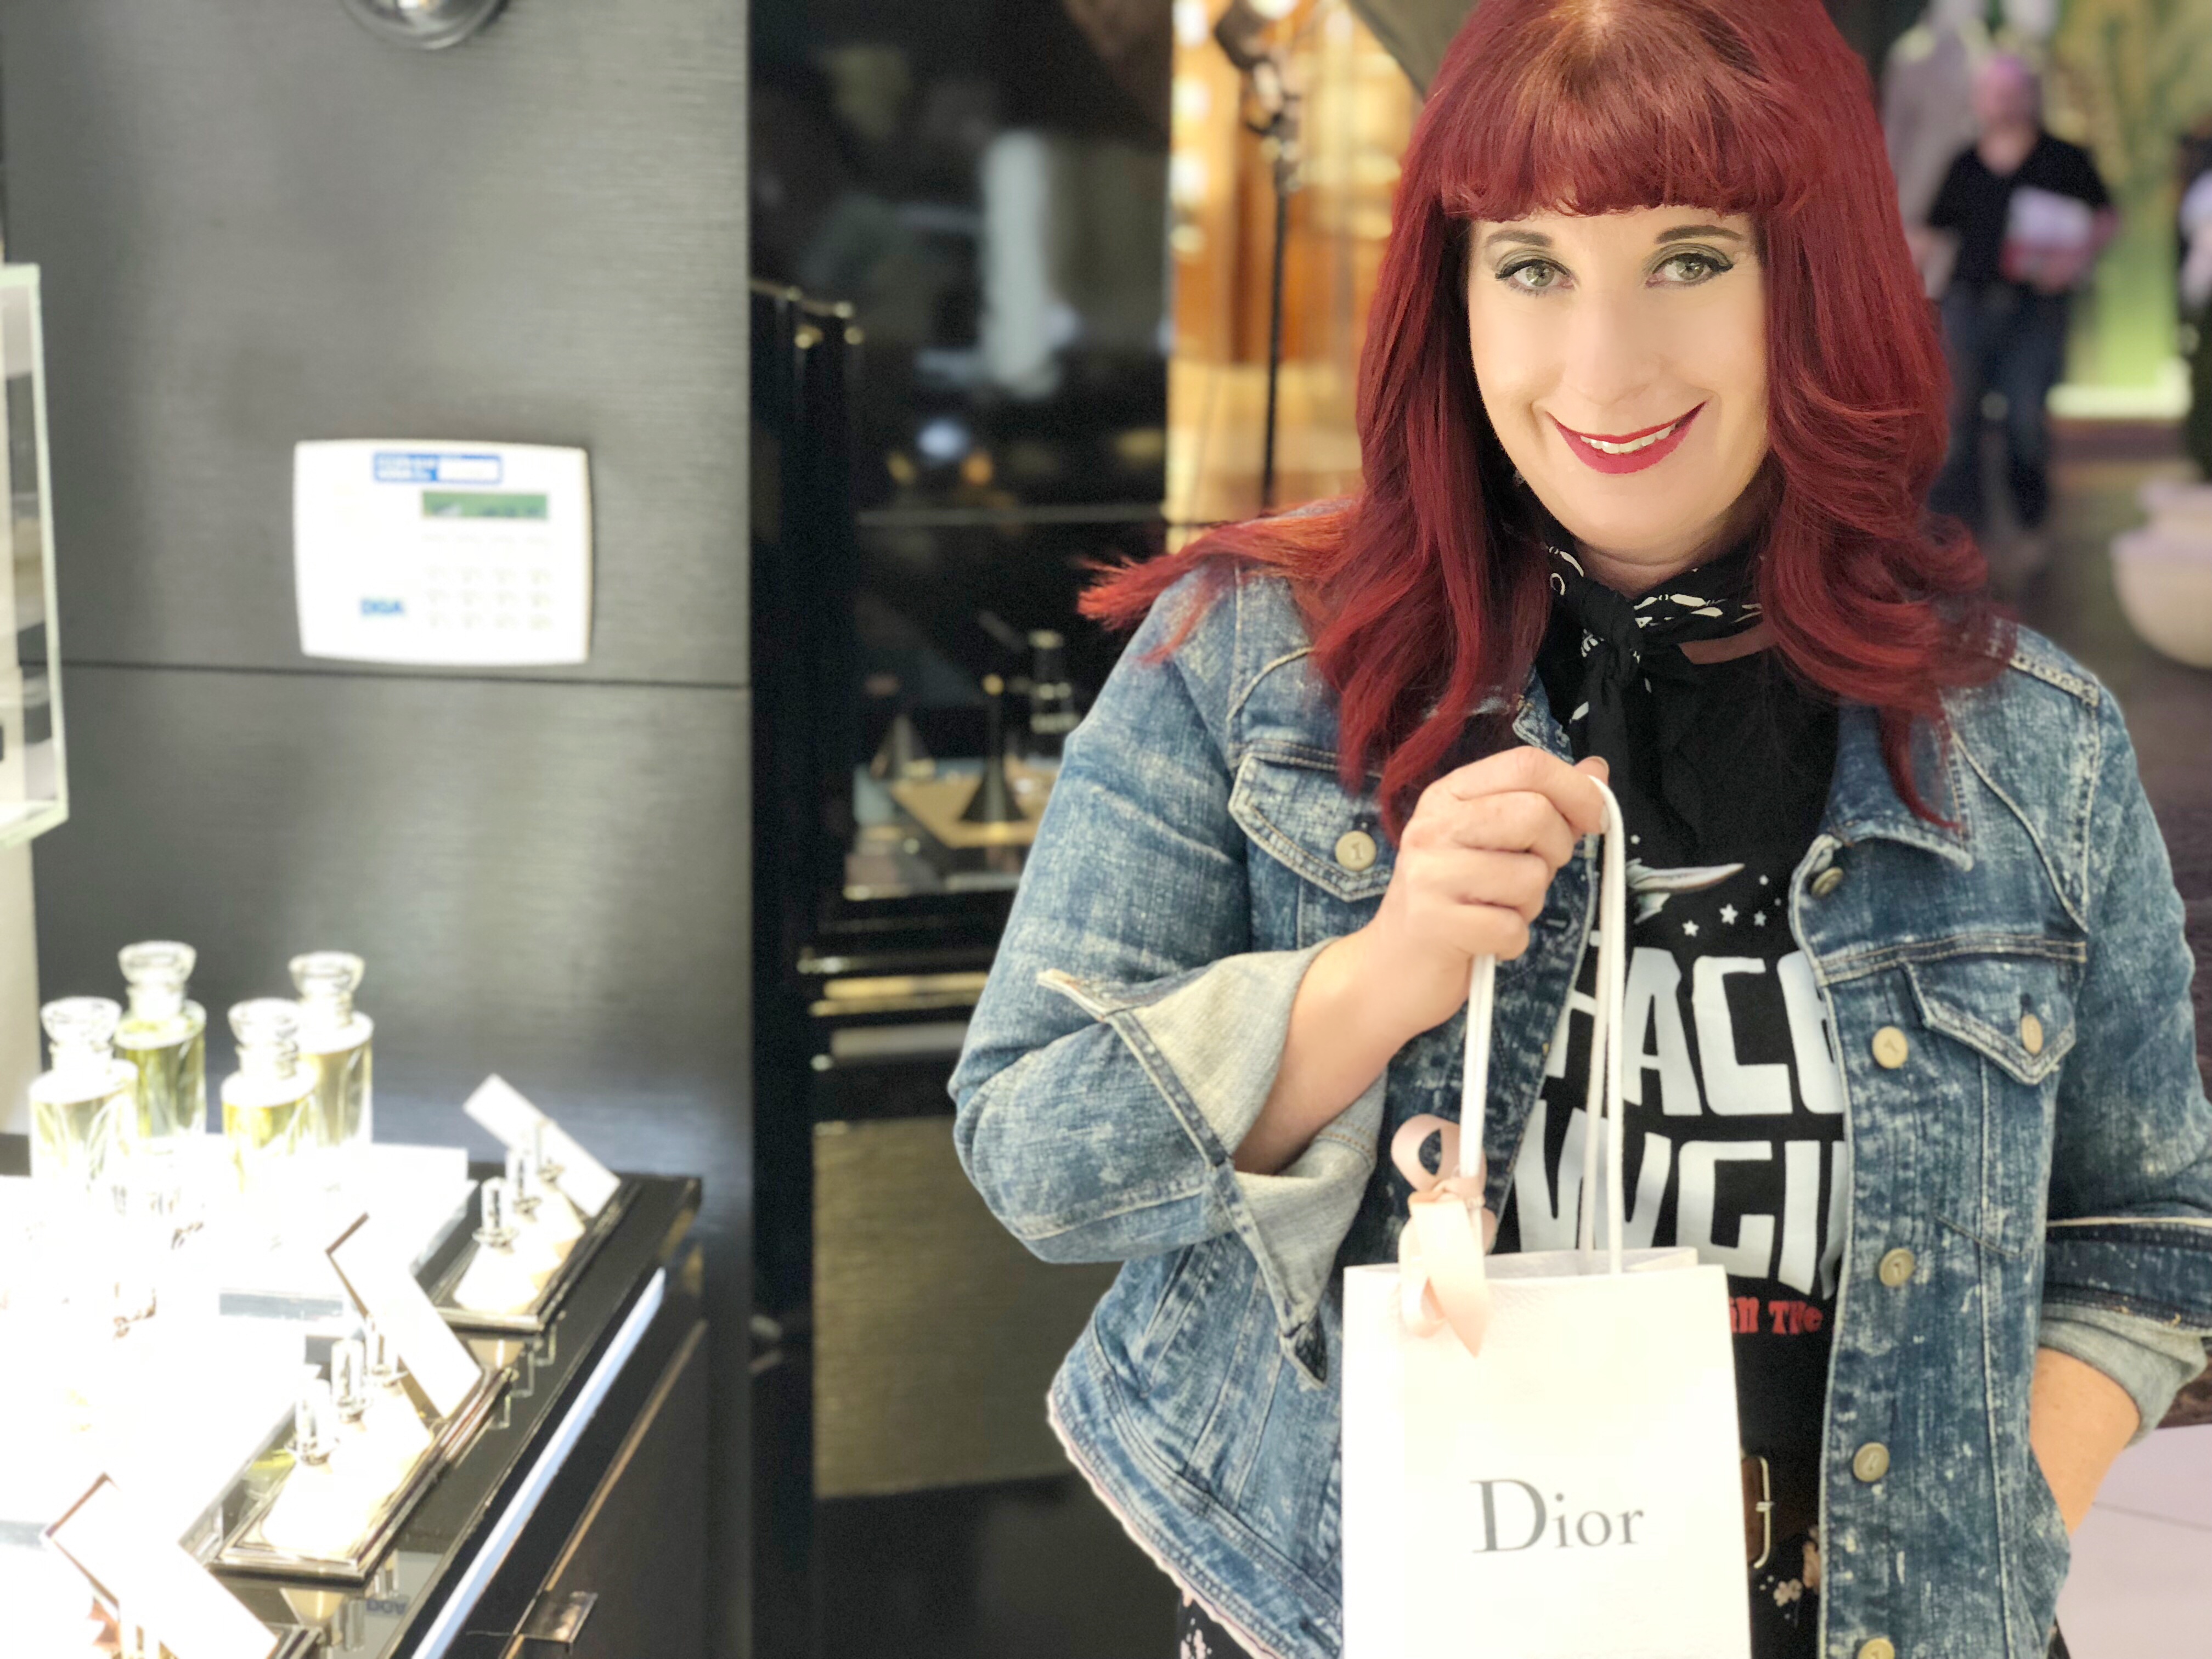 Dior Makeup Forum Shops